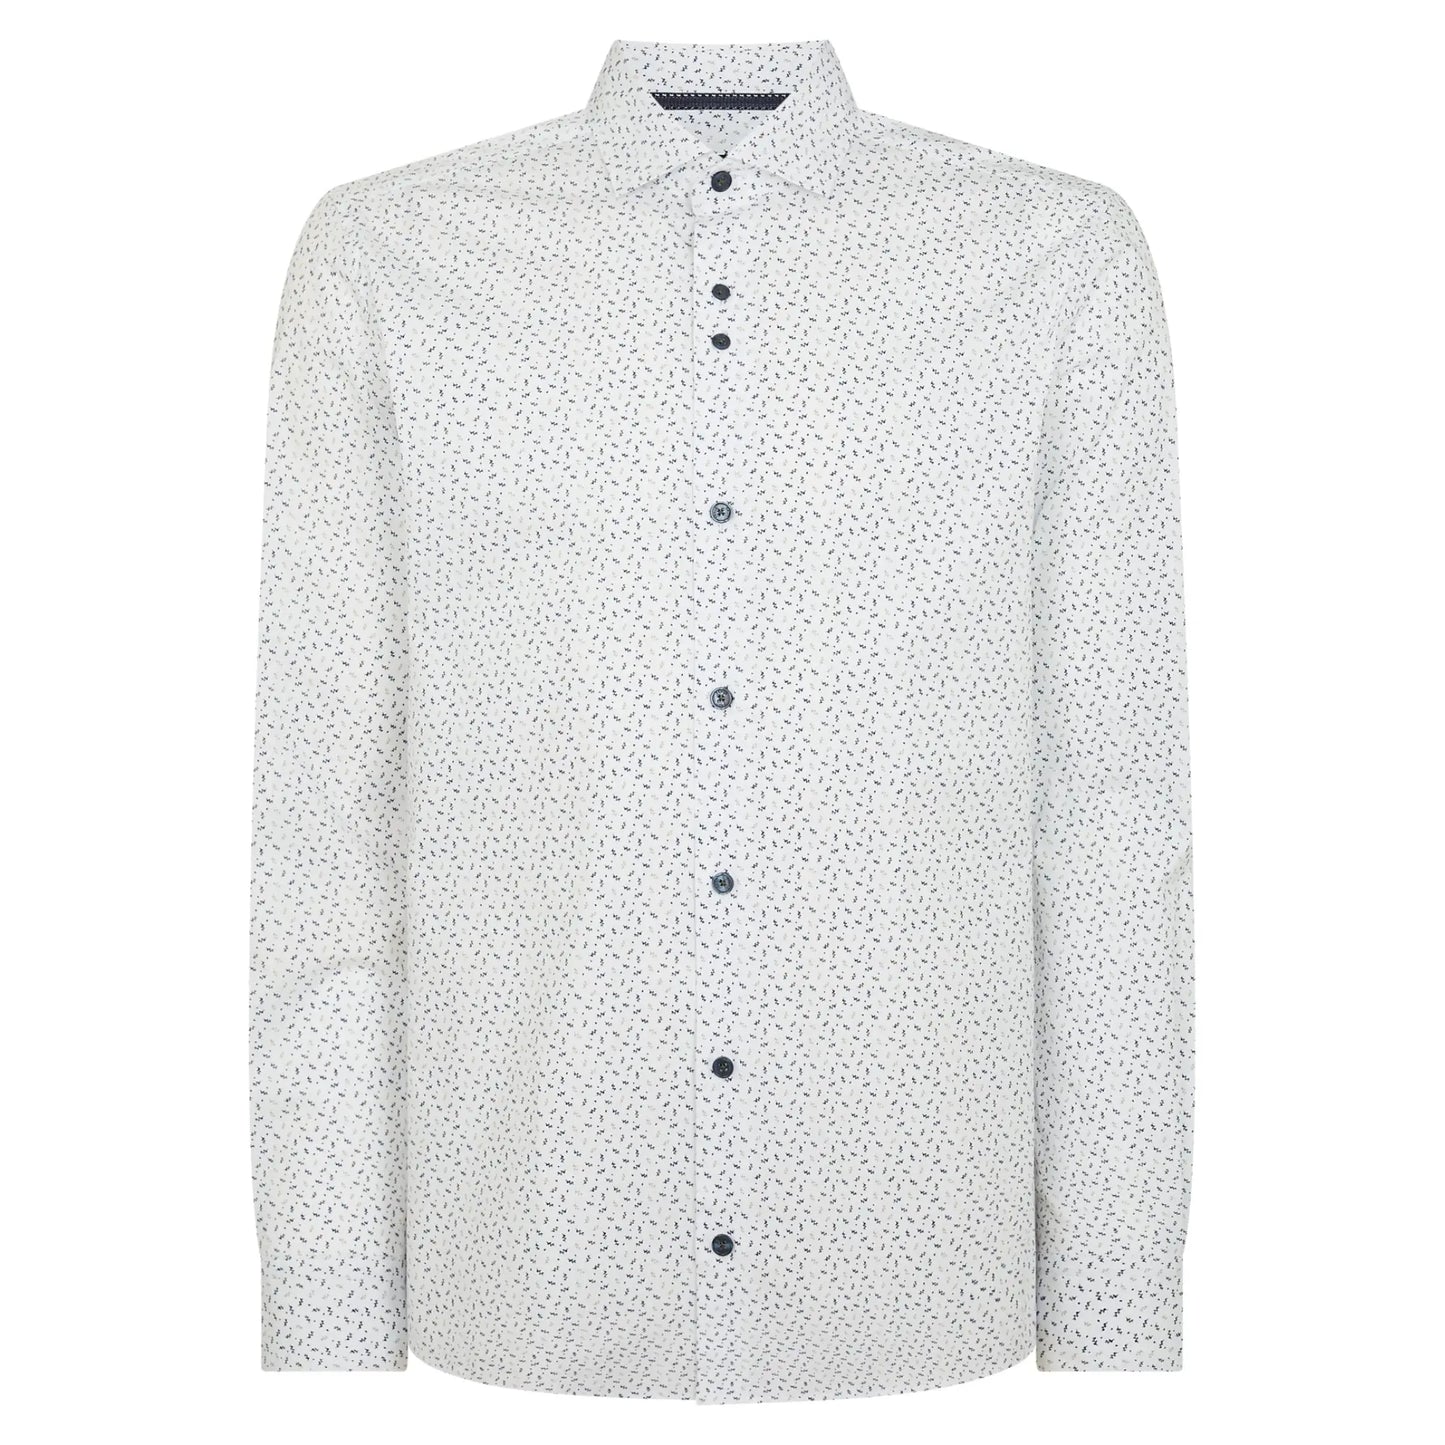 Buy Remus Uomo Frank Leaf Print Long Sleeve Shirt - Navy/White | Long-Sleeved Shirtss at Woven Durham